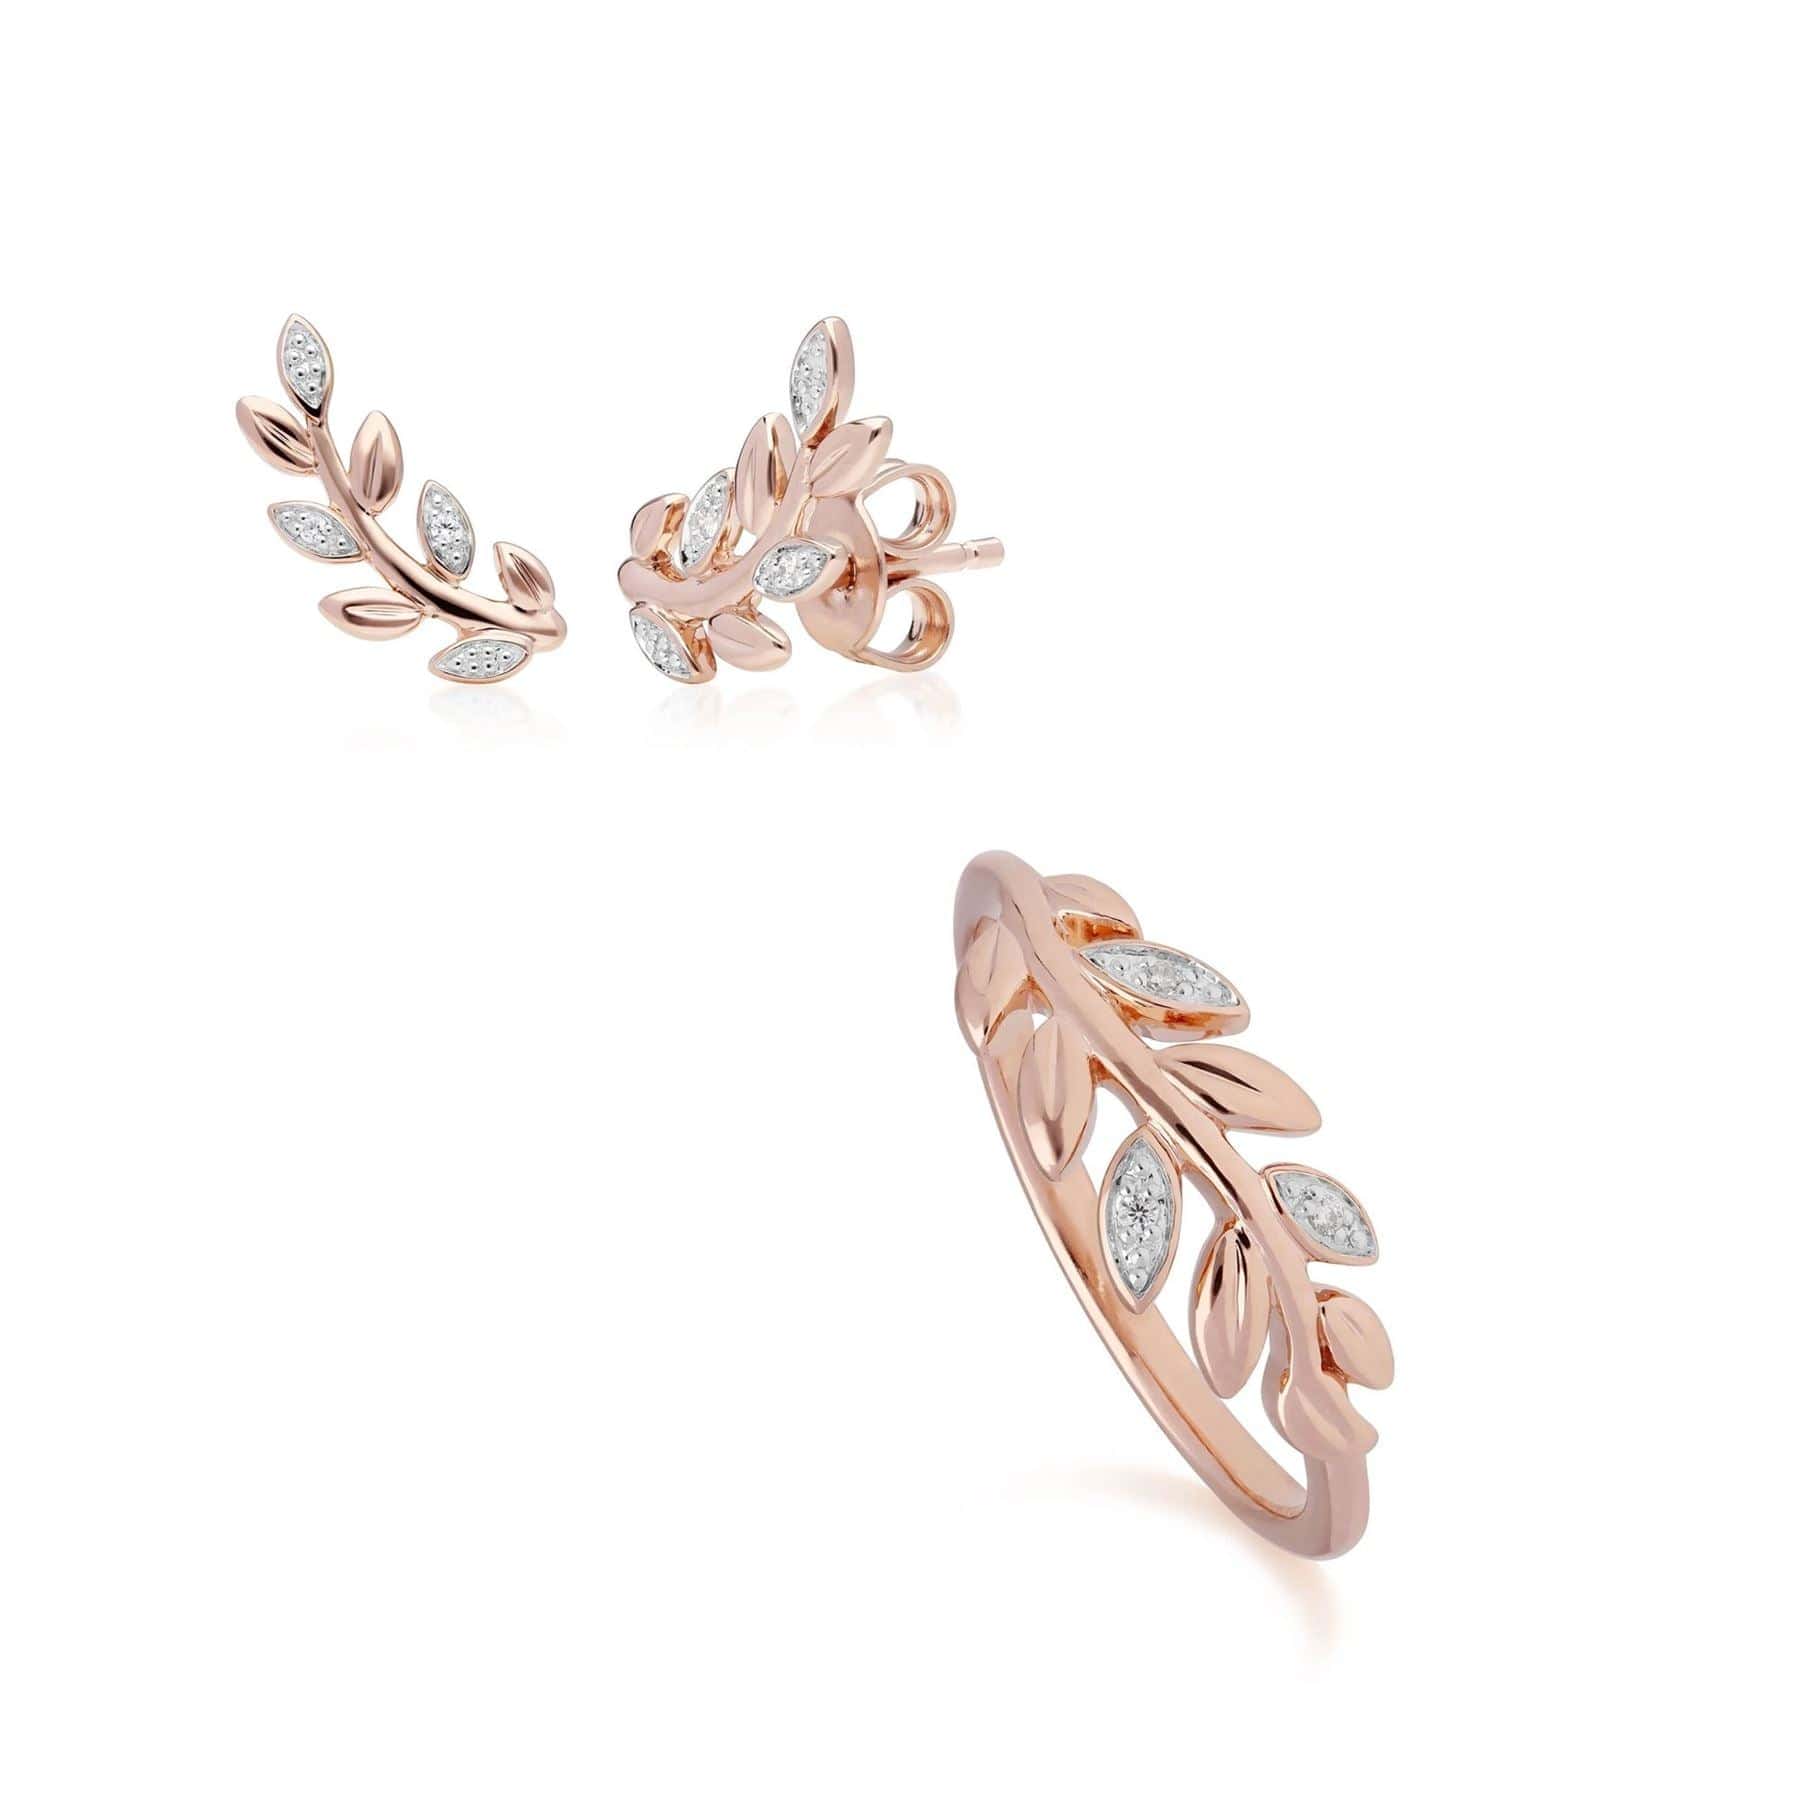 191E0390029-191R0899029 O Leaf Diamond Stud Earring & Ring Set in 9ct Rose Gold 1